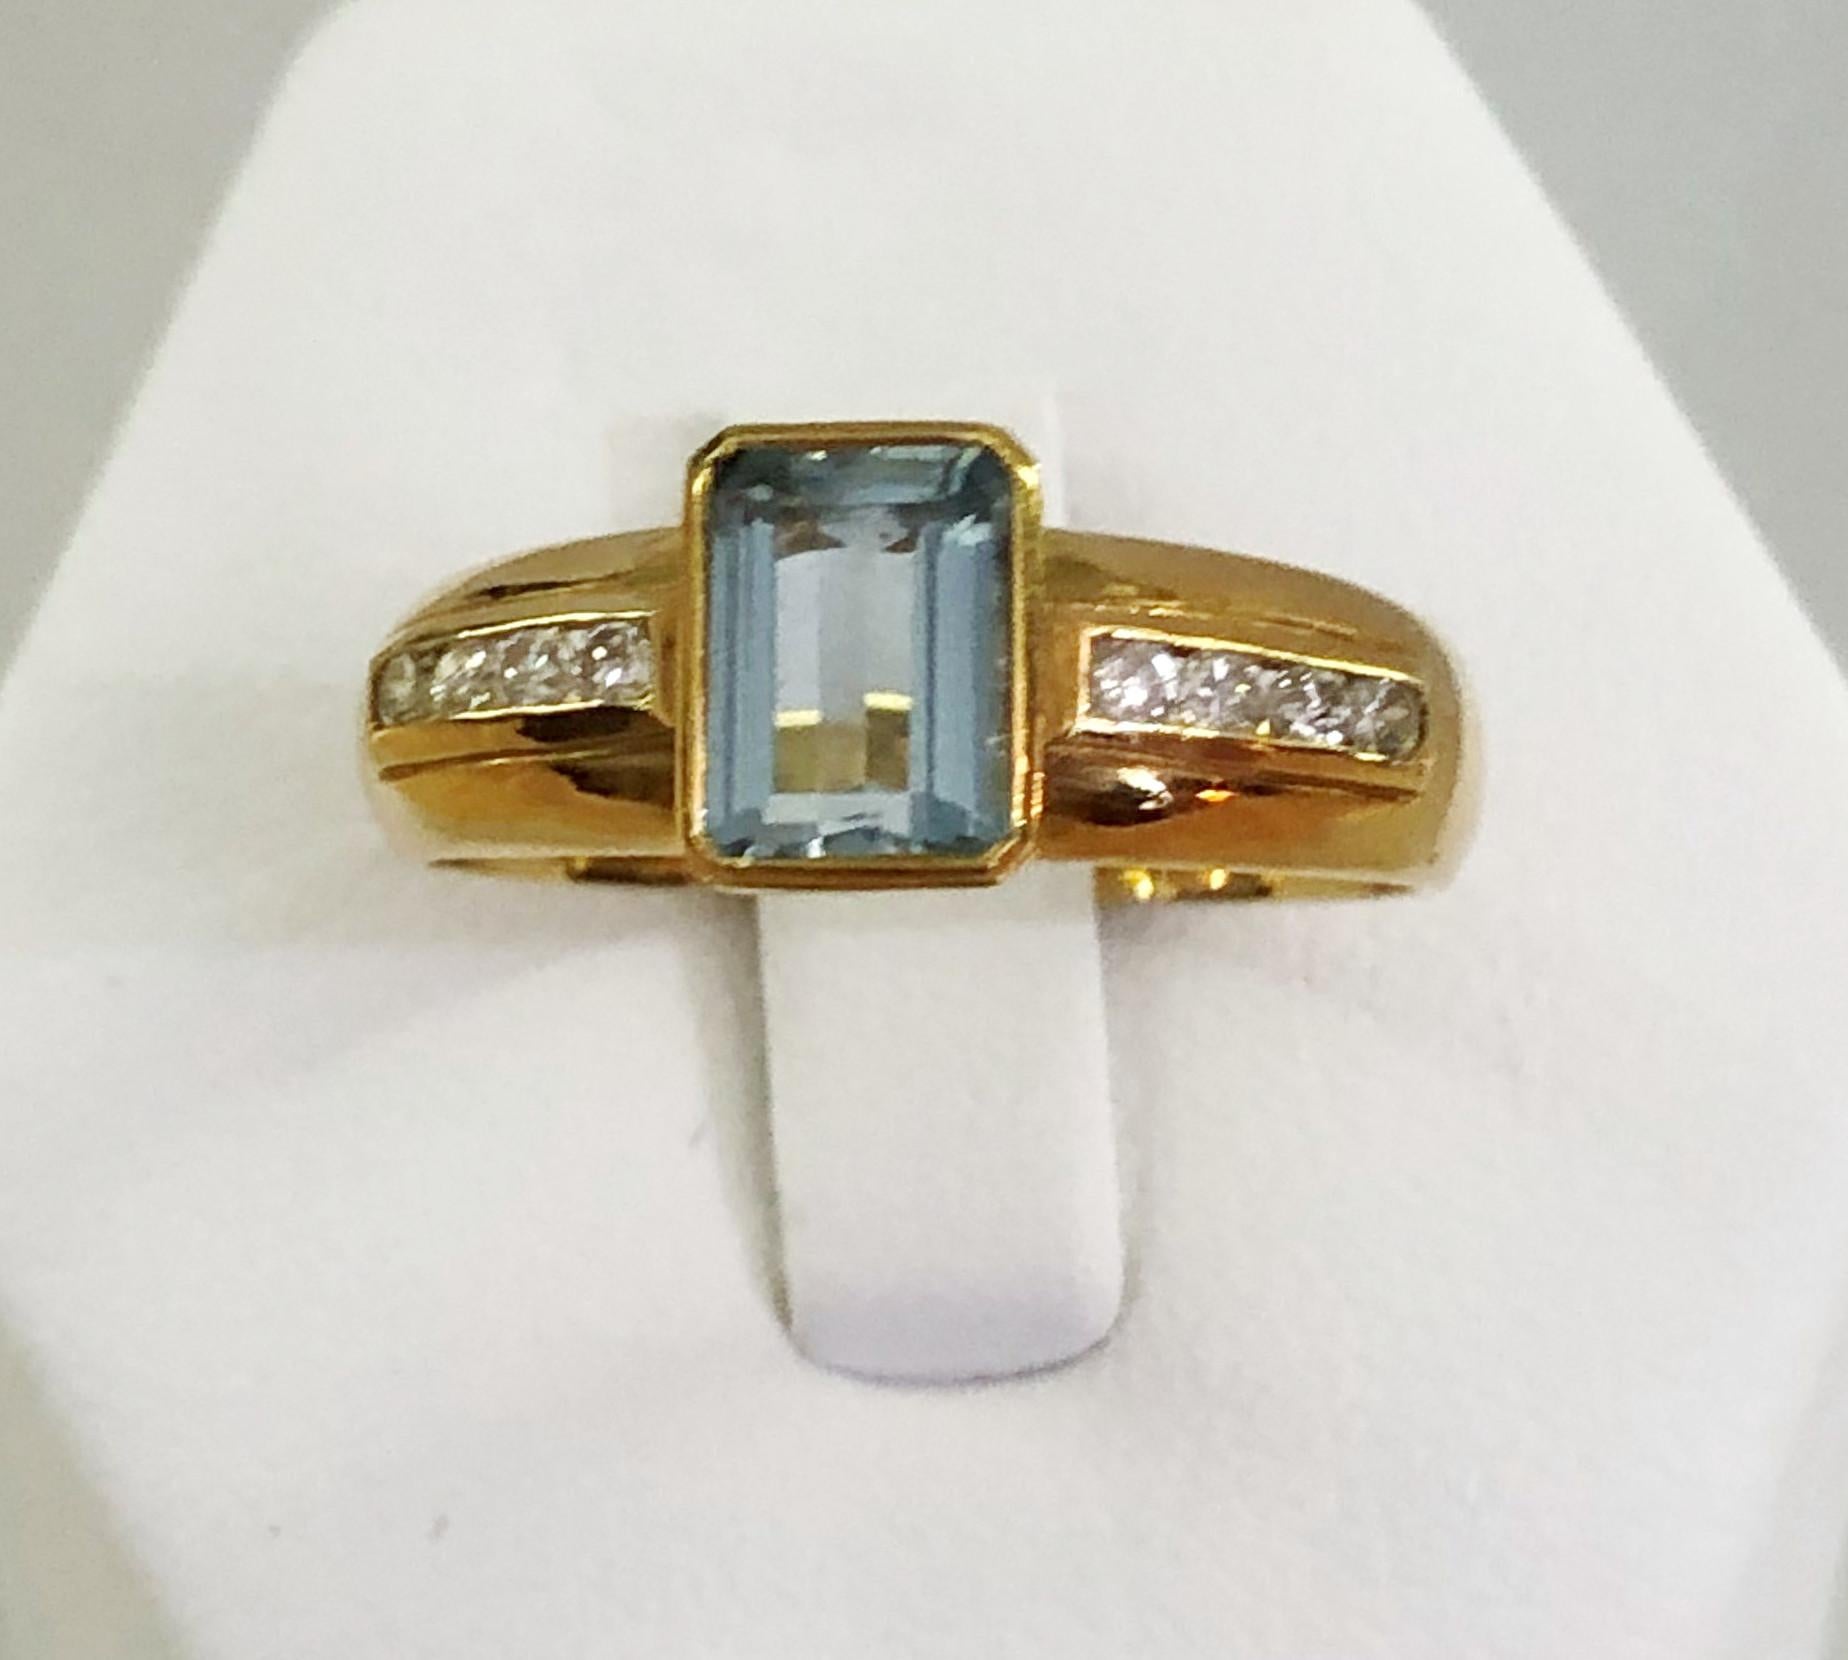 Vintage ring with 18 karat yellow gold band, aquamarine stone and brilliant diamonds, Italy 1960s
Ring size US 7.5